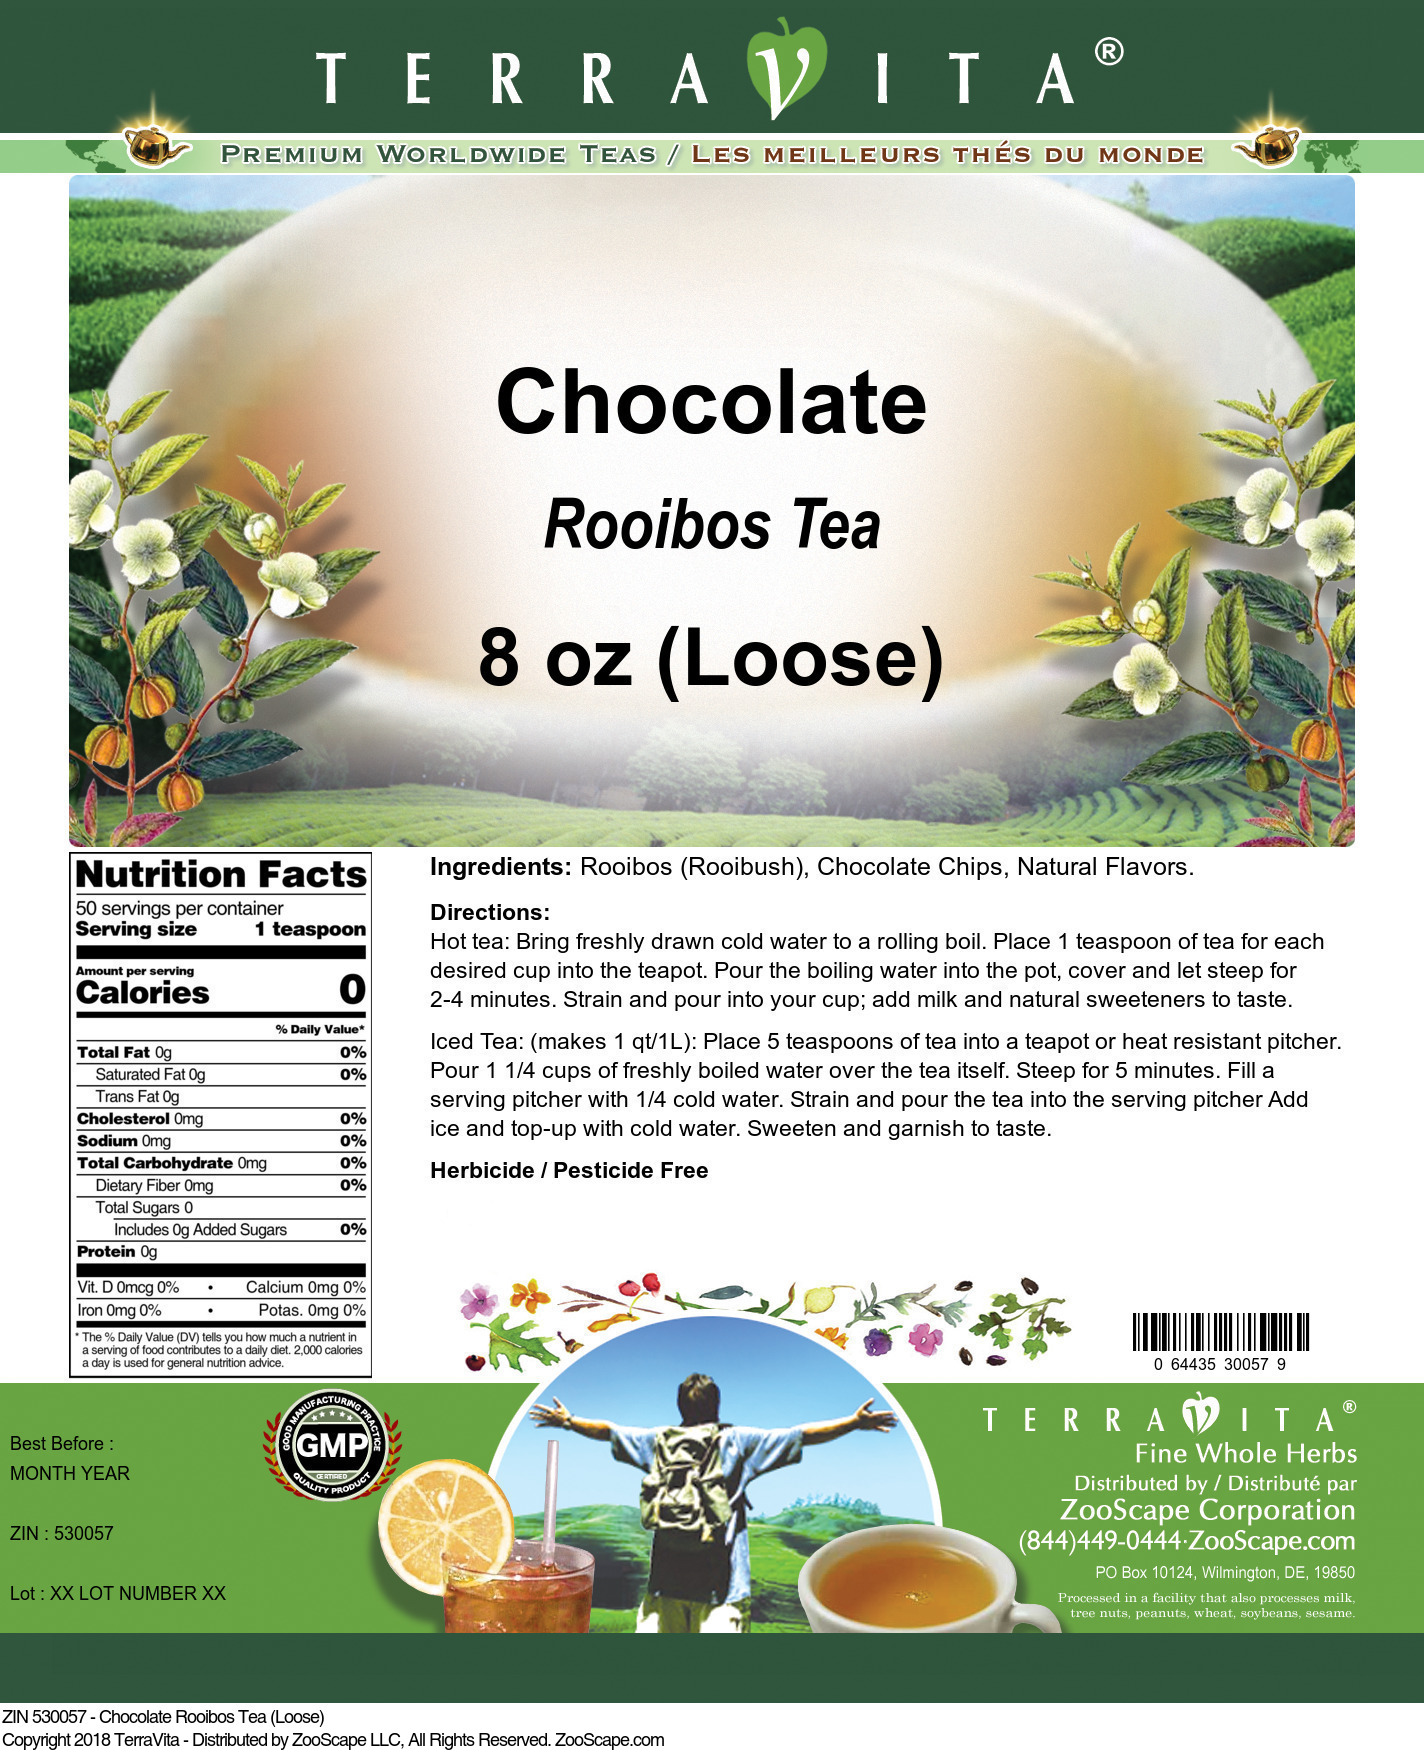 Chocolate Rooibos Tea (Loose) - Label